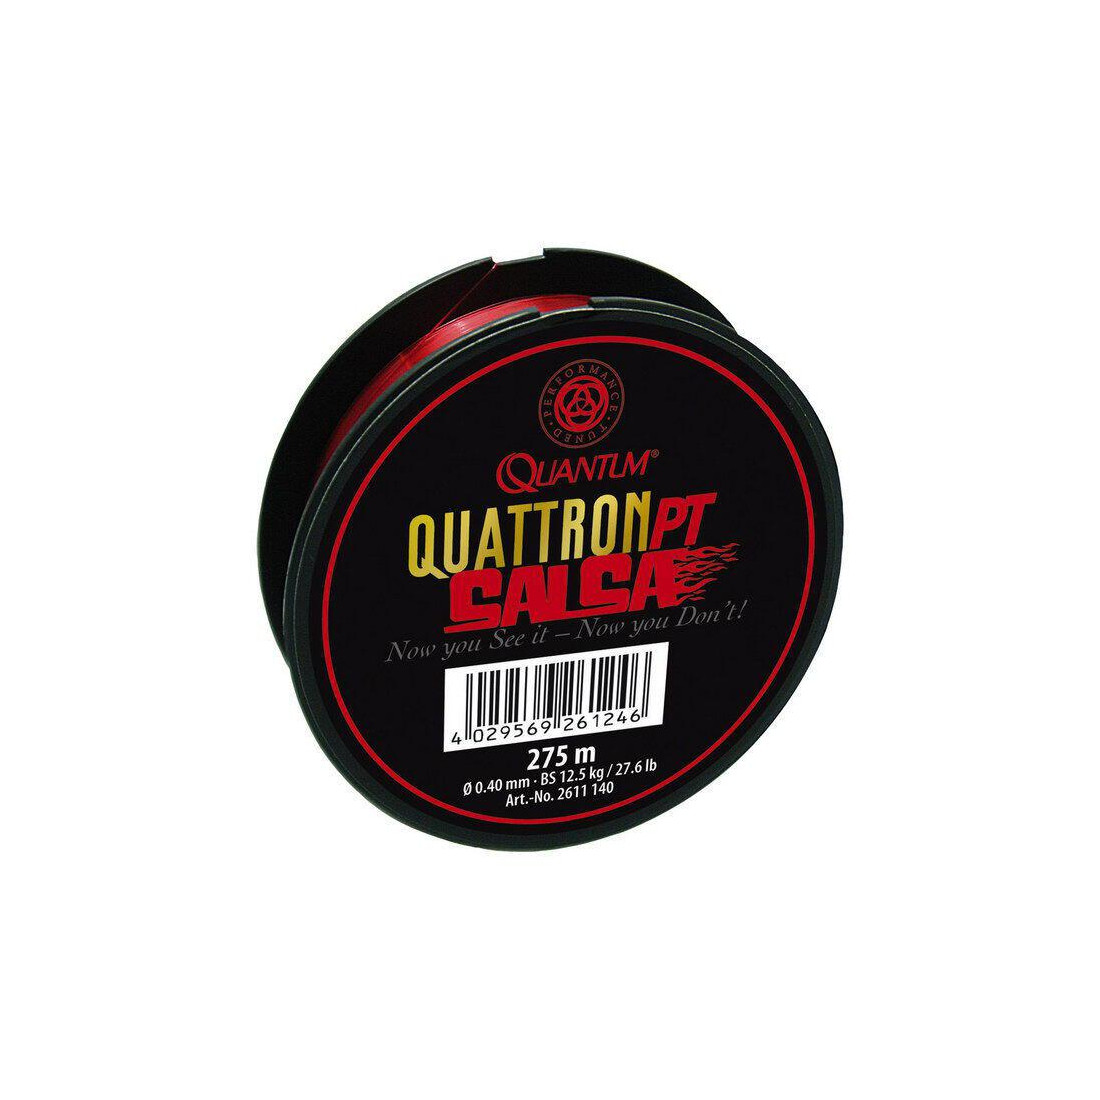 0.35mm Monofilament Line Quantum Quattron Salsa Transparent Red 275m 0.25mm 